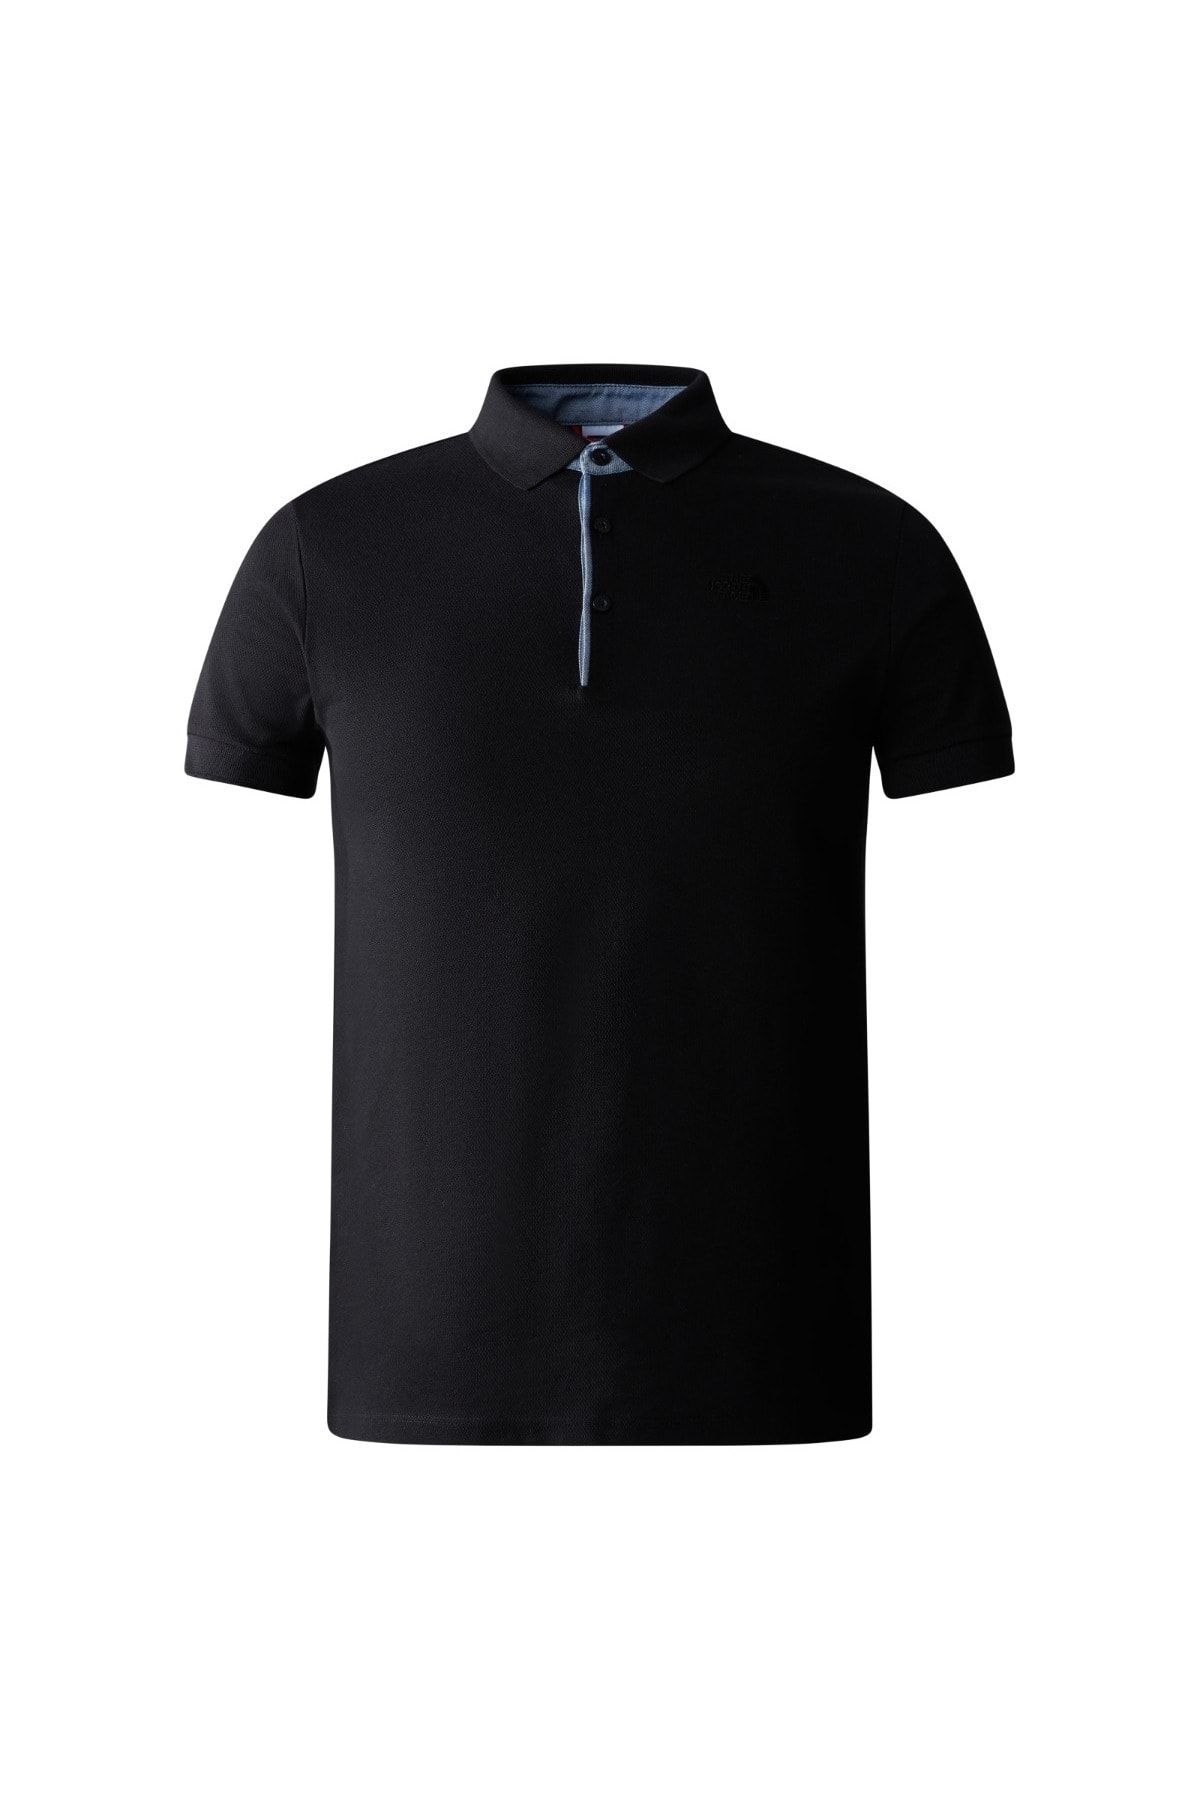 The North Face Face Premium Piquet Erkek Siyah Polo Tişört